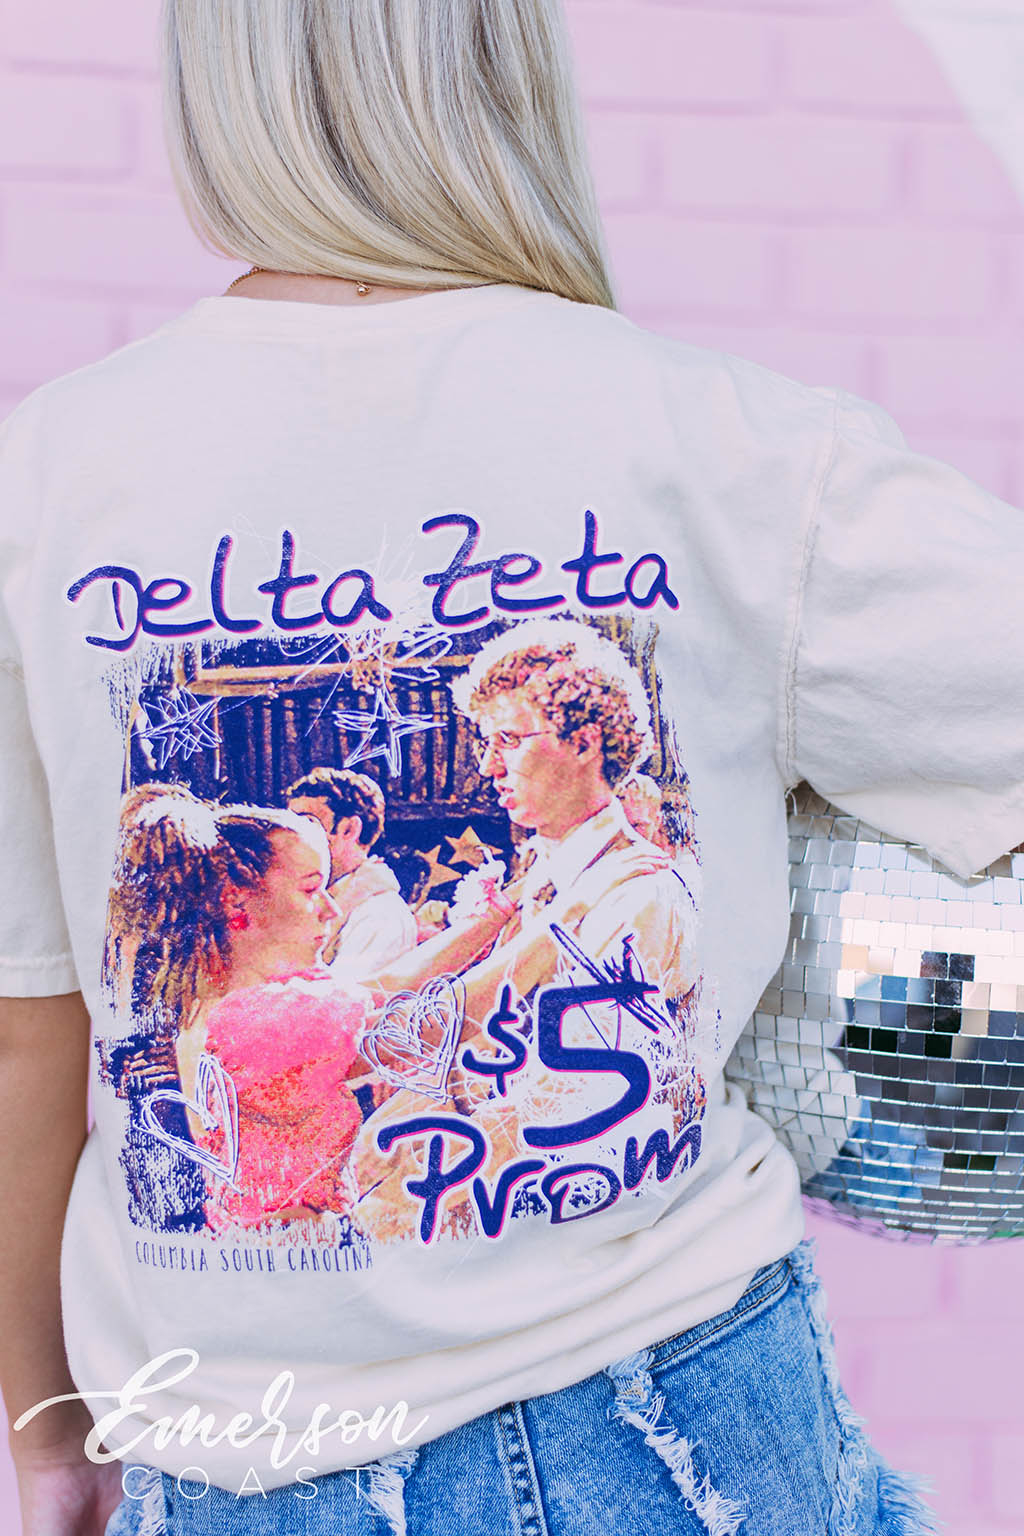 Delta Zeta $5 Prom Function Tshirt